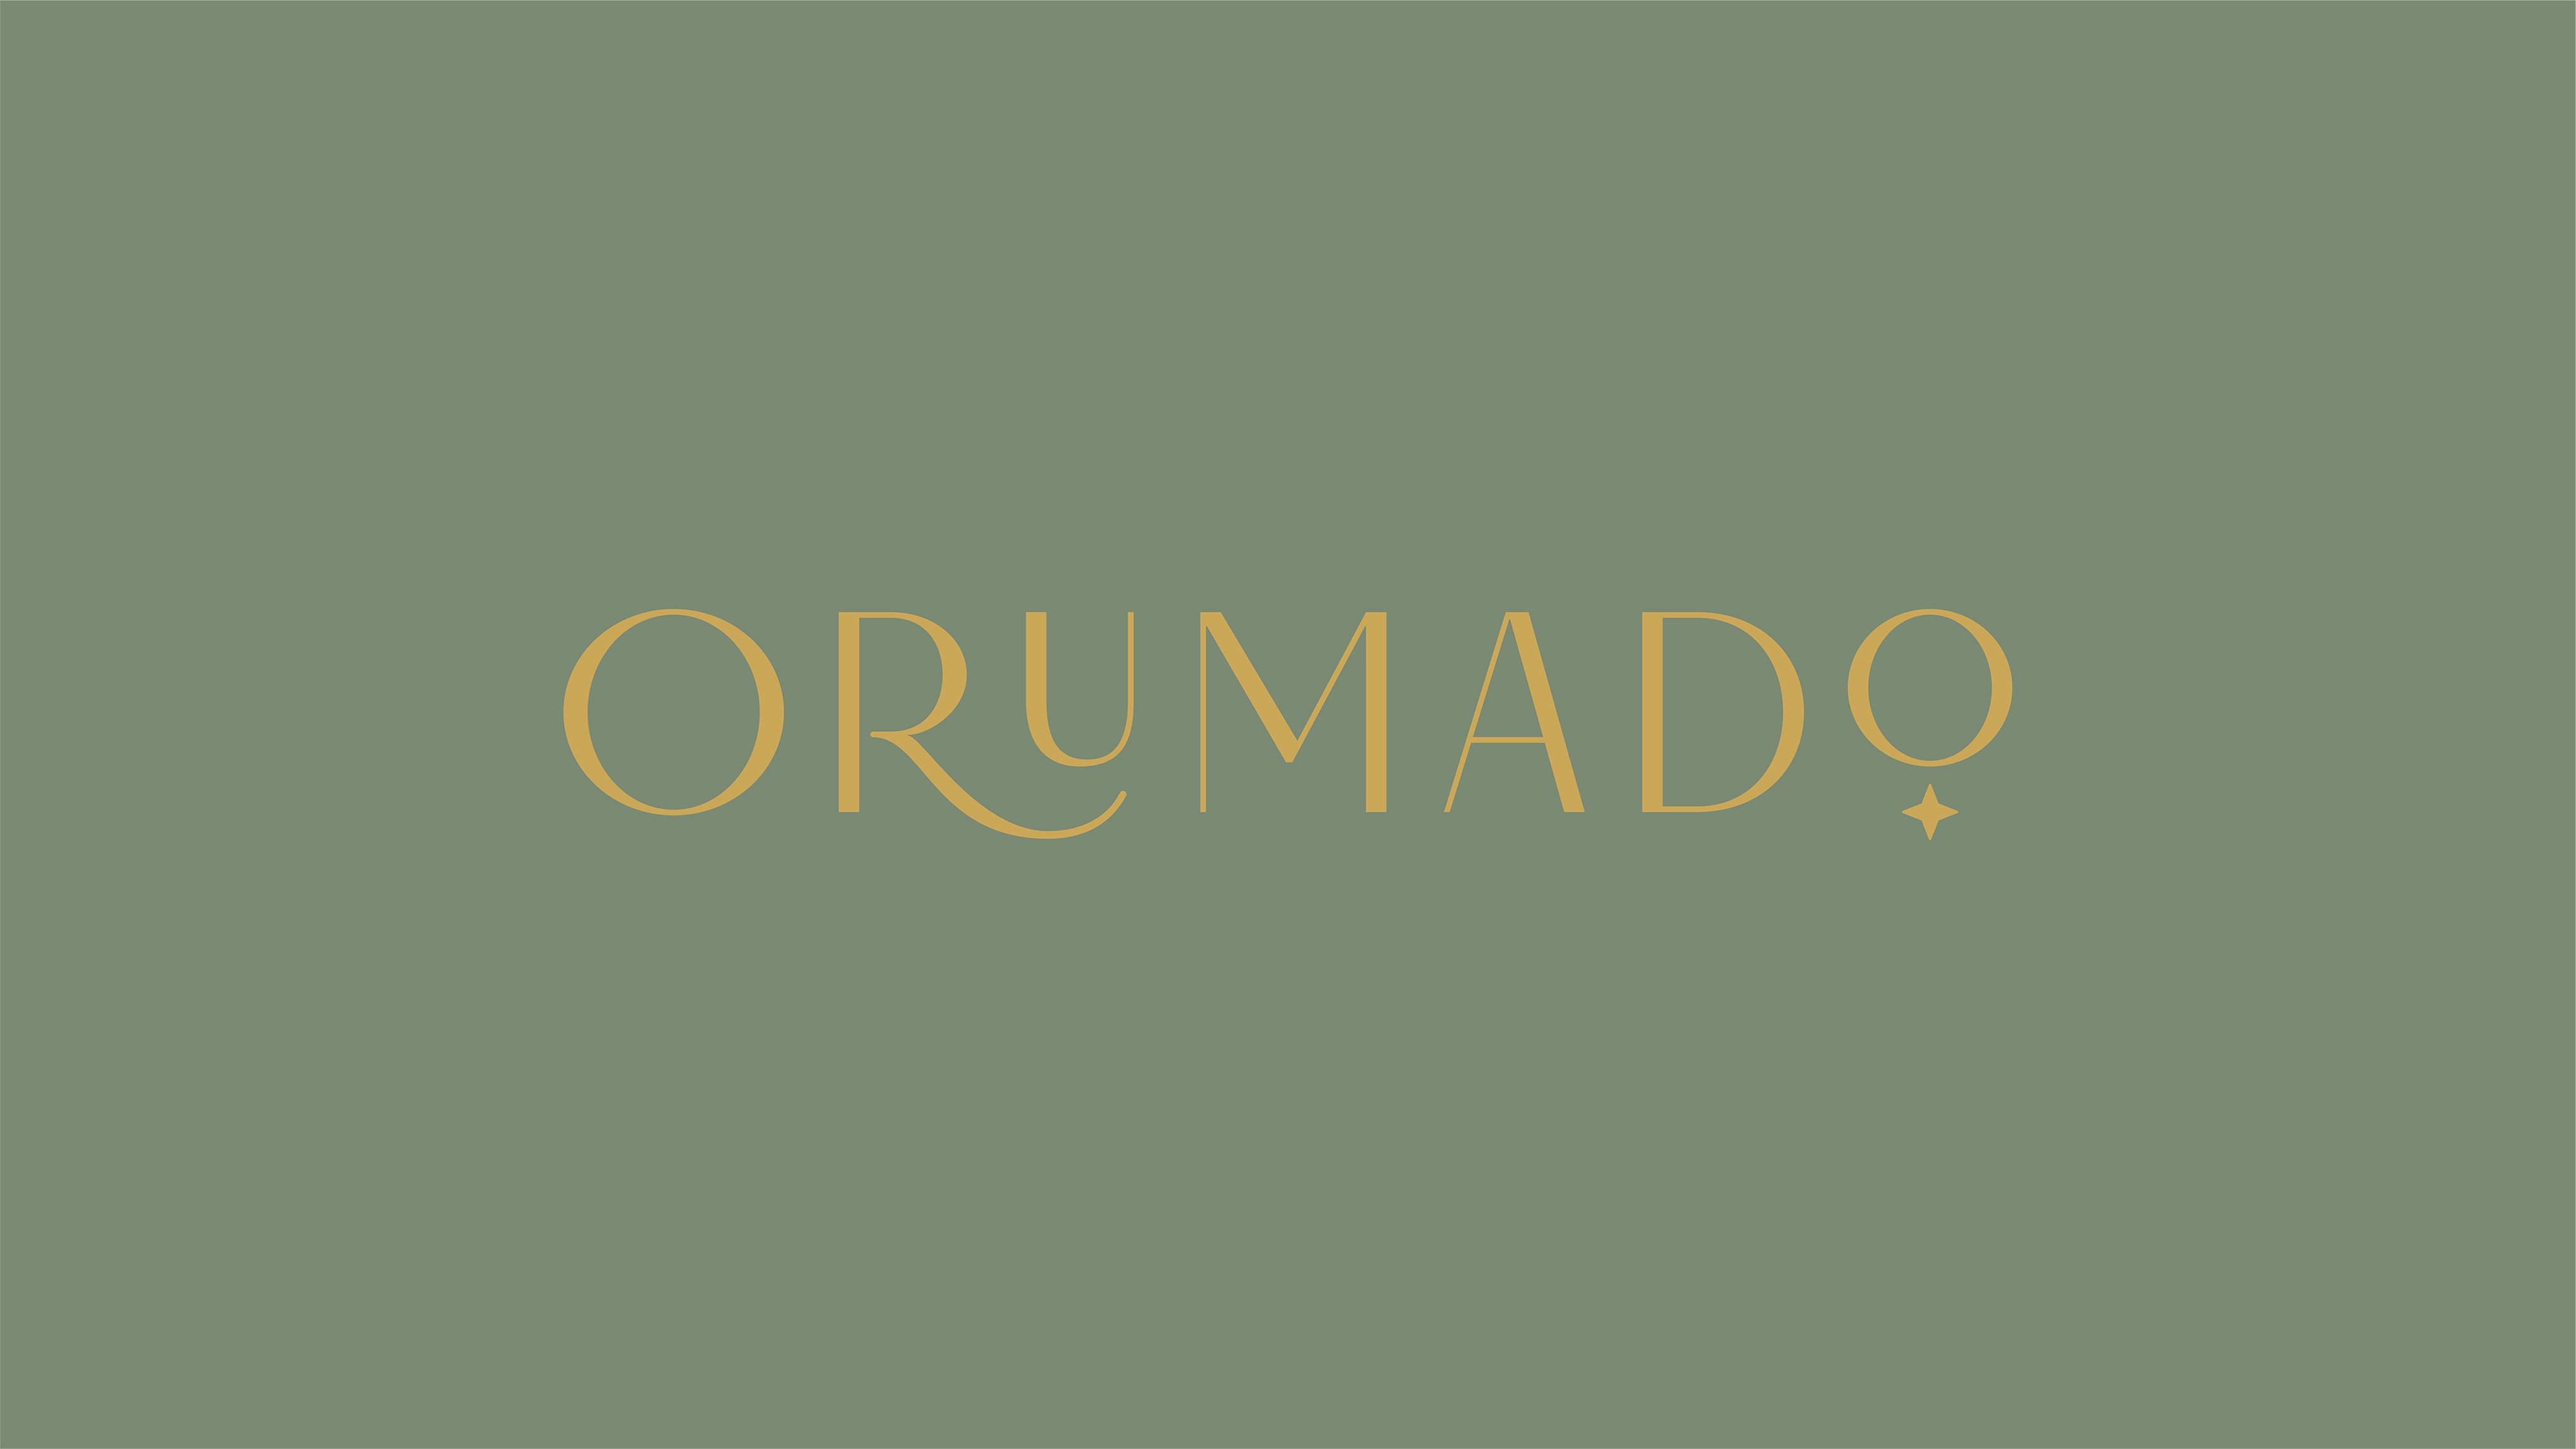 Orumado Wedding Design Agency Identity